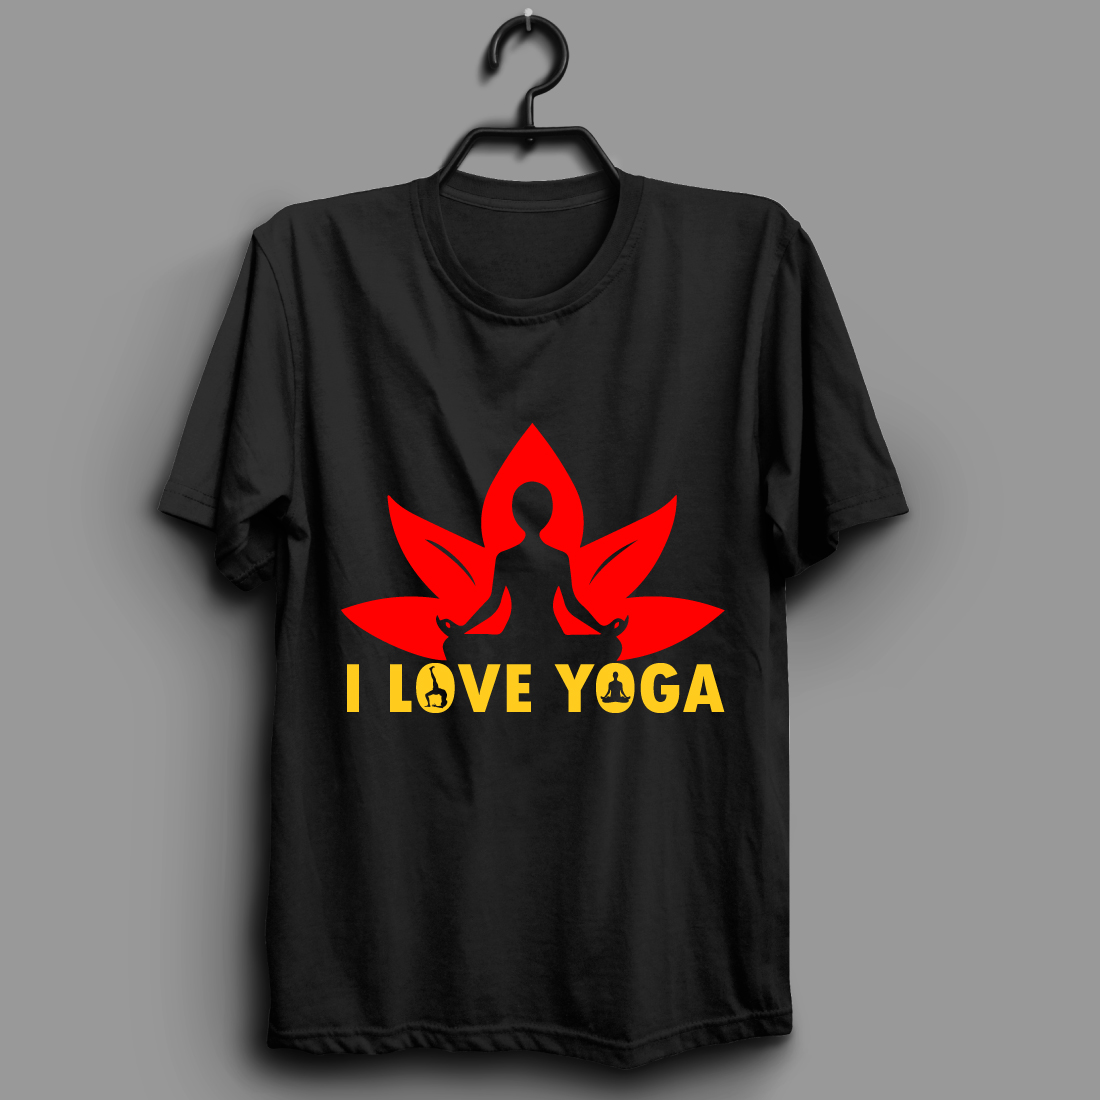 yoga t shirt design 1 364